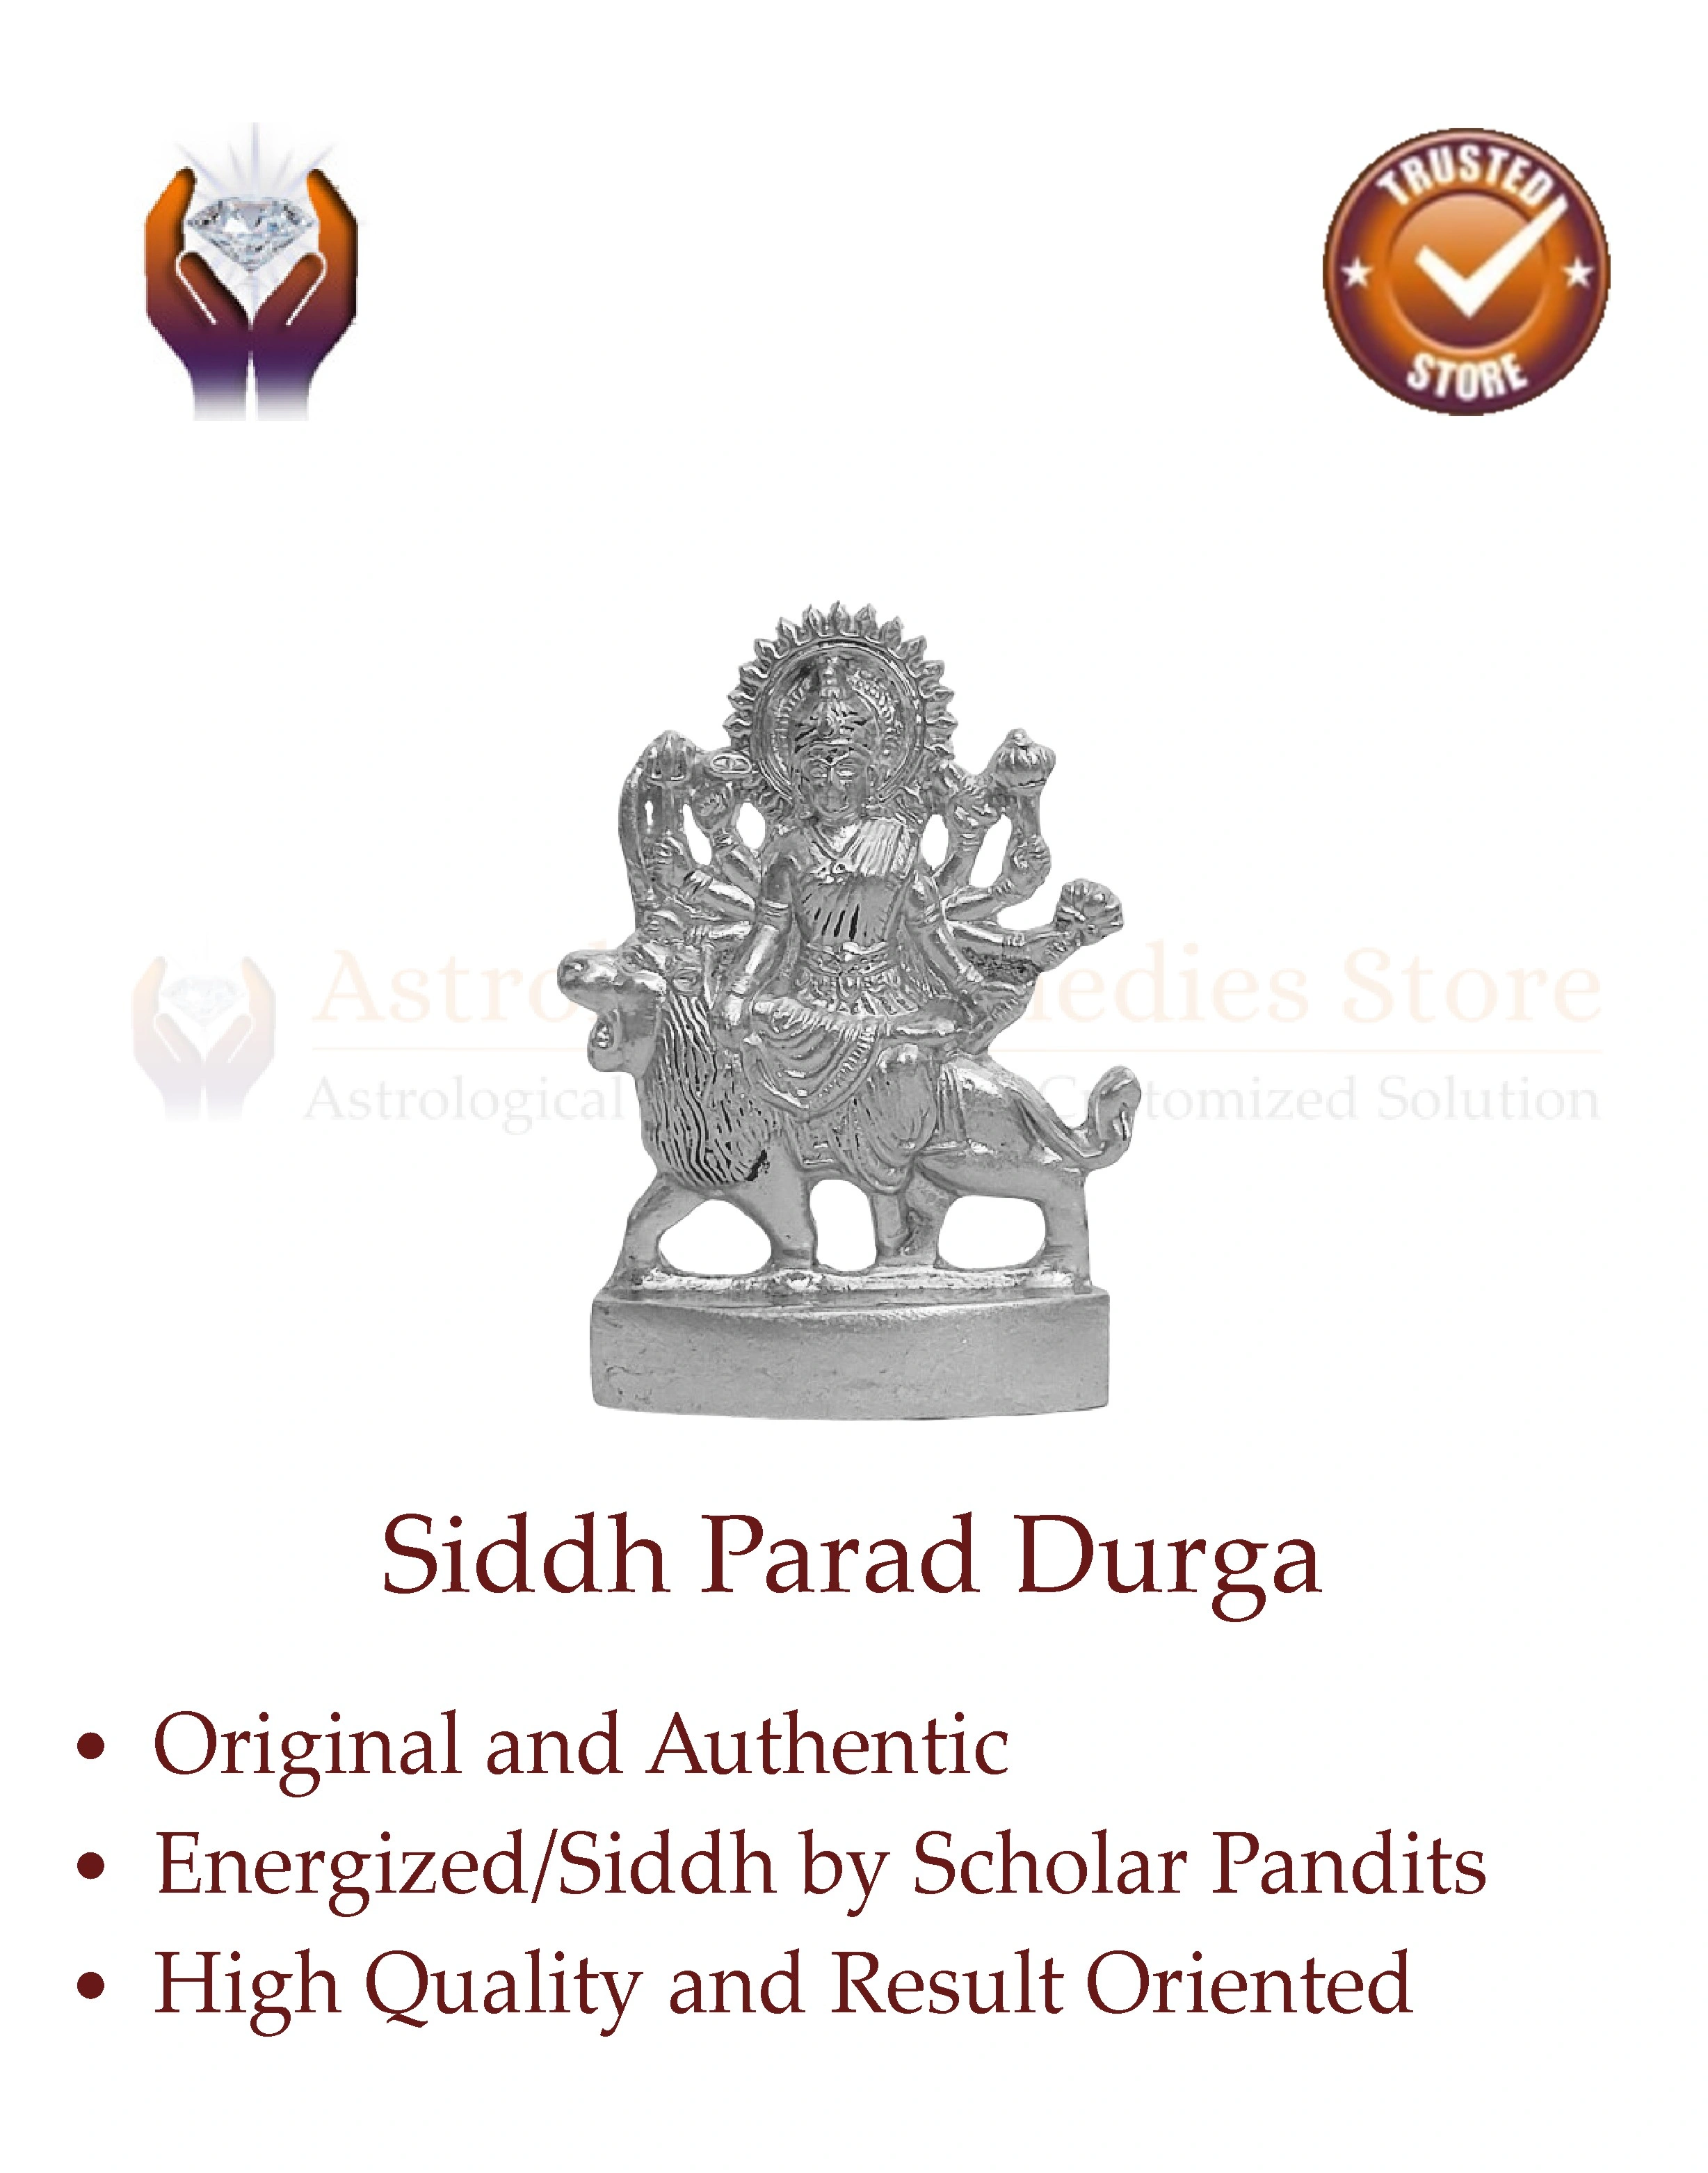 Parad Durga Benefits